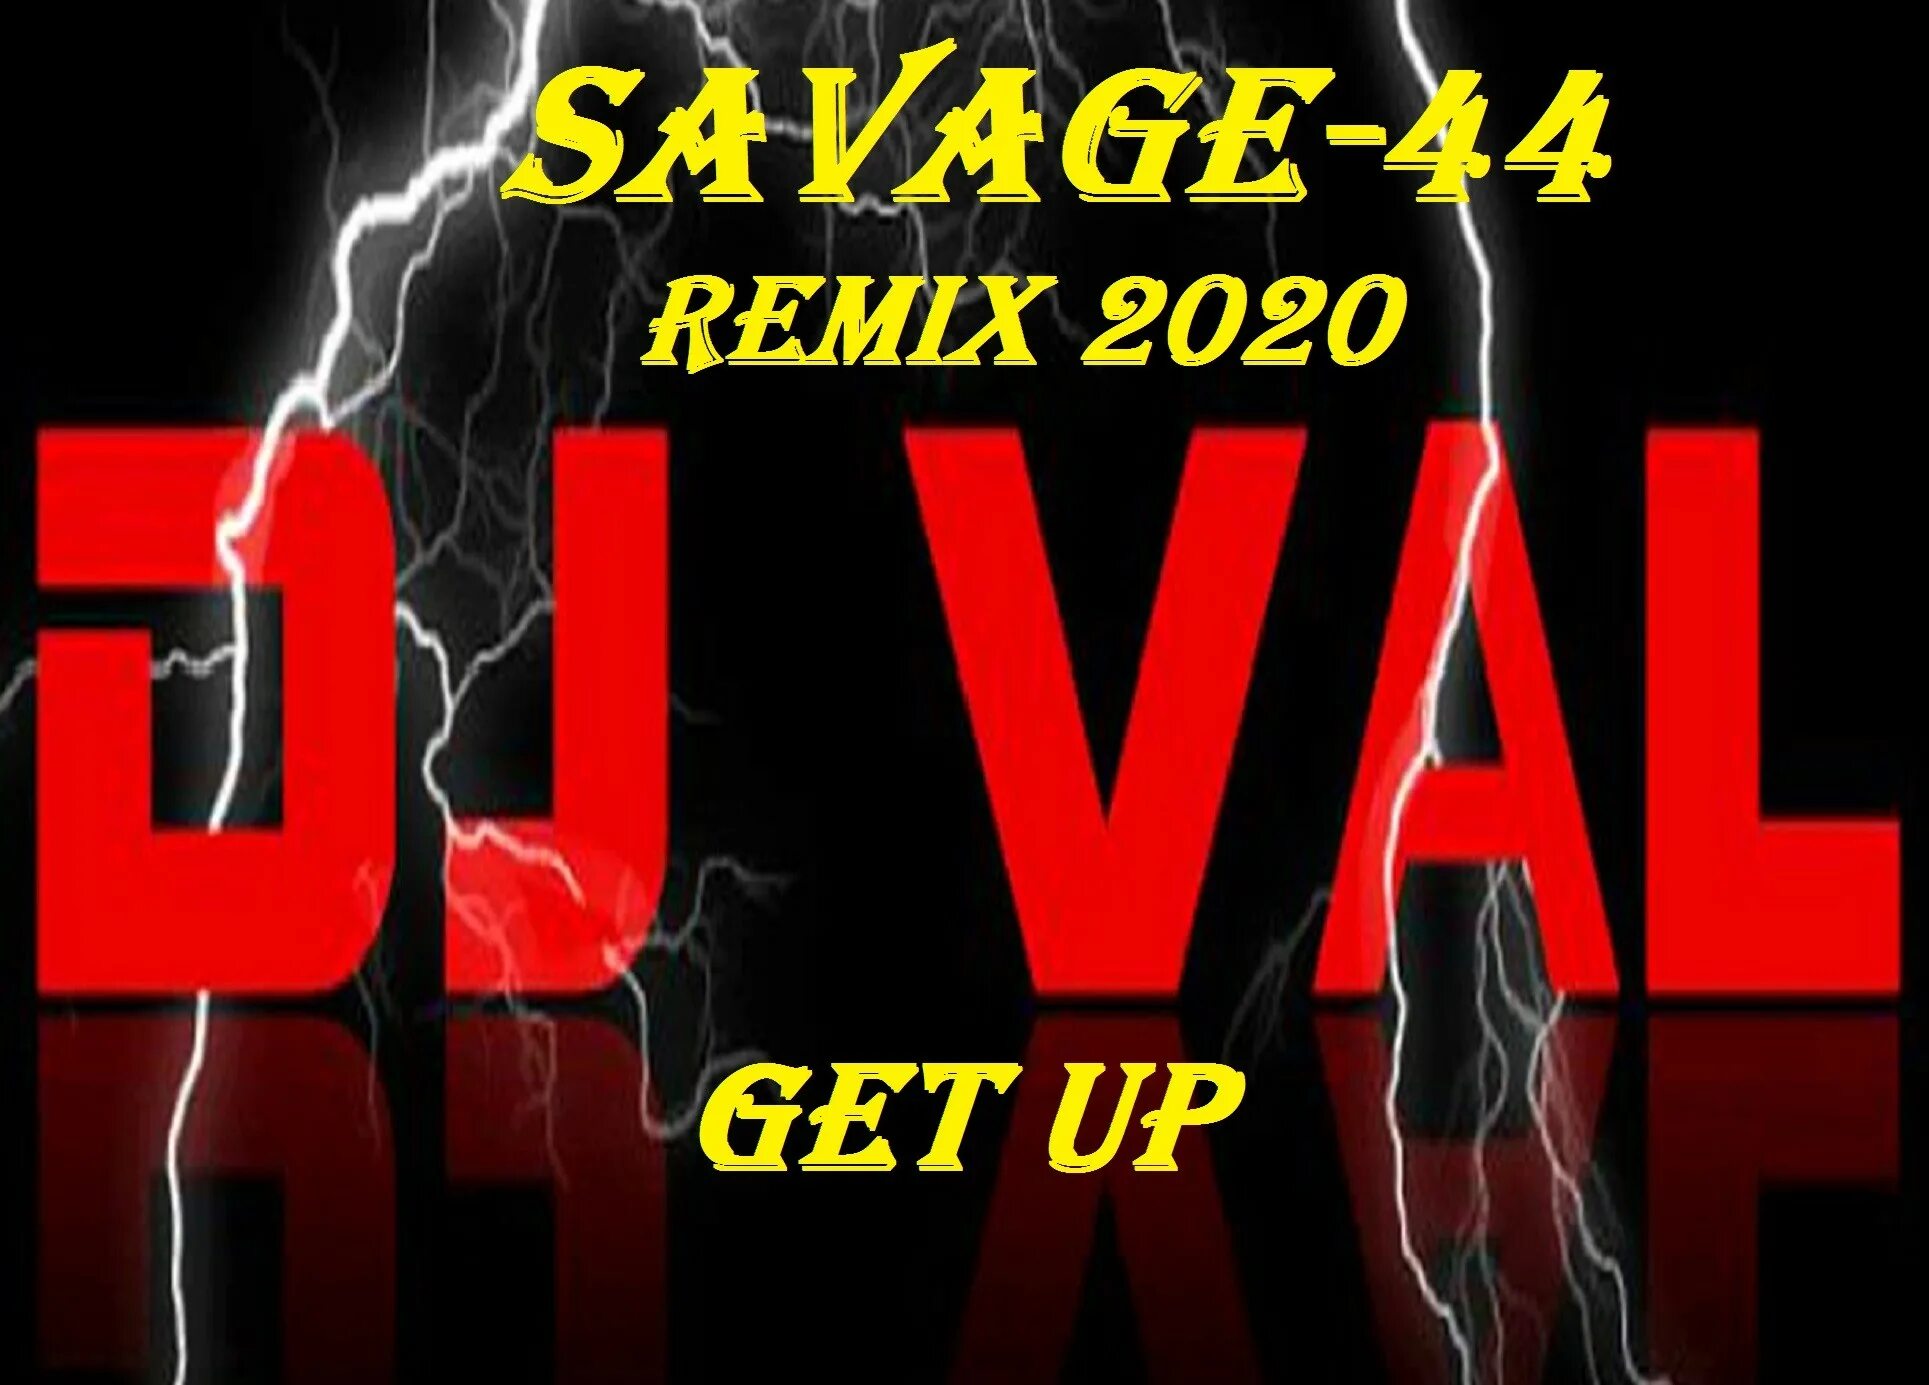 Саваж ремикс слушать. DJ Savage 44. DJ Val ignition Savage 44 Remix. Диджей вал диско. DJ Val - ignition (Savage 44 Remix 2020).